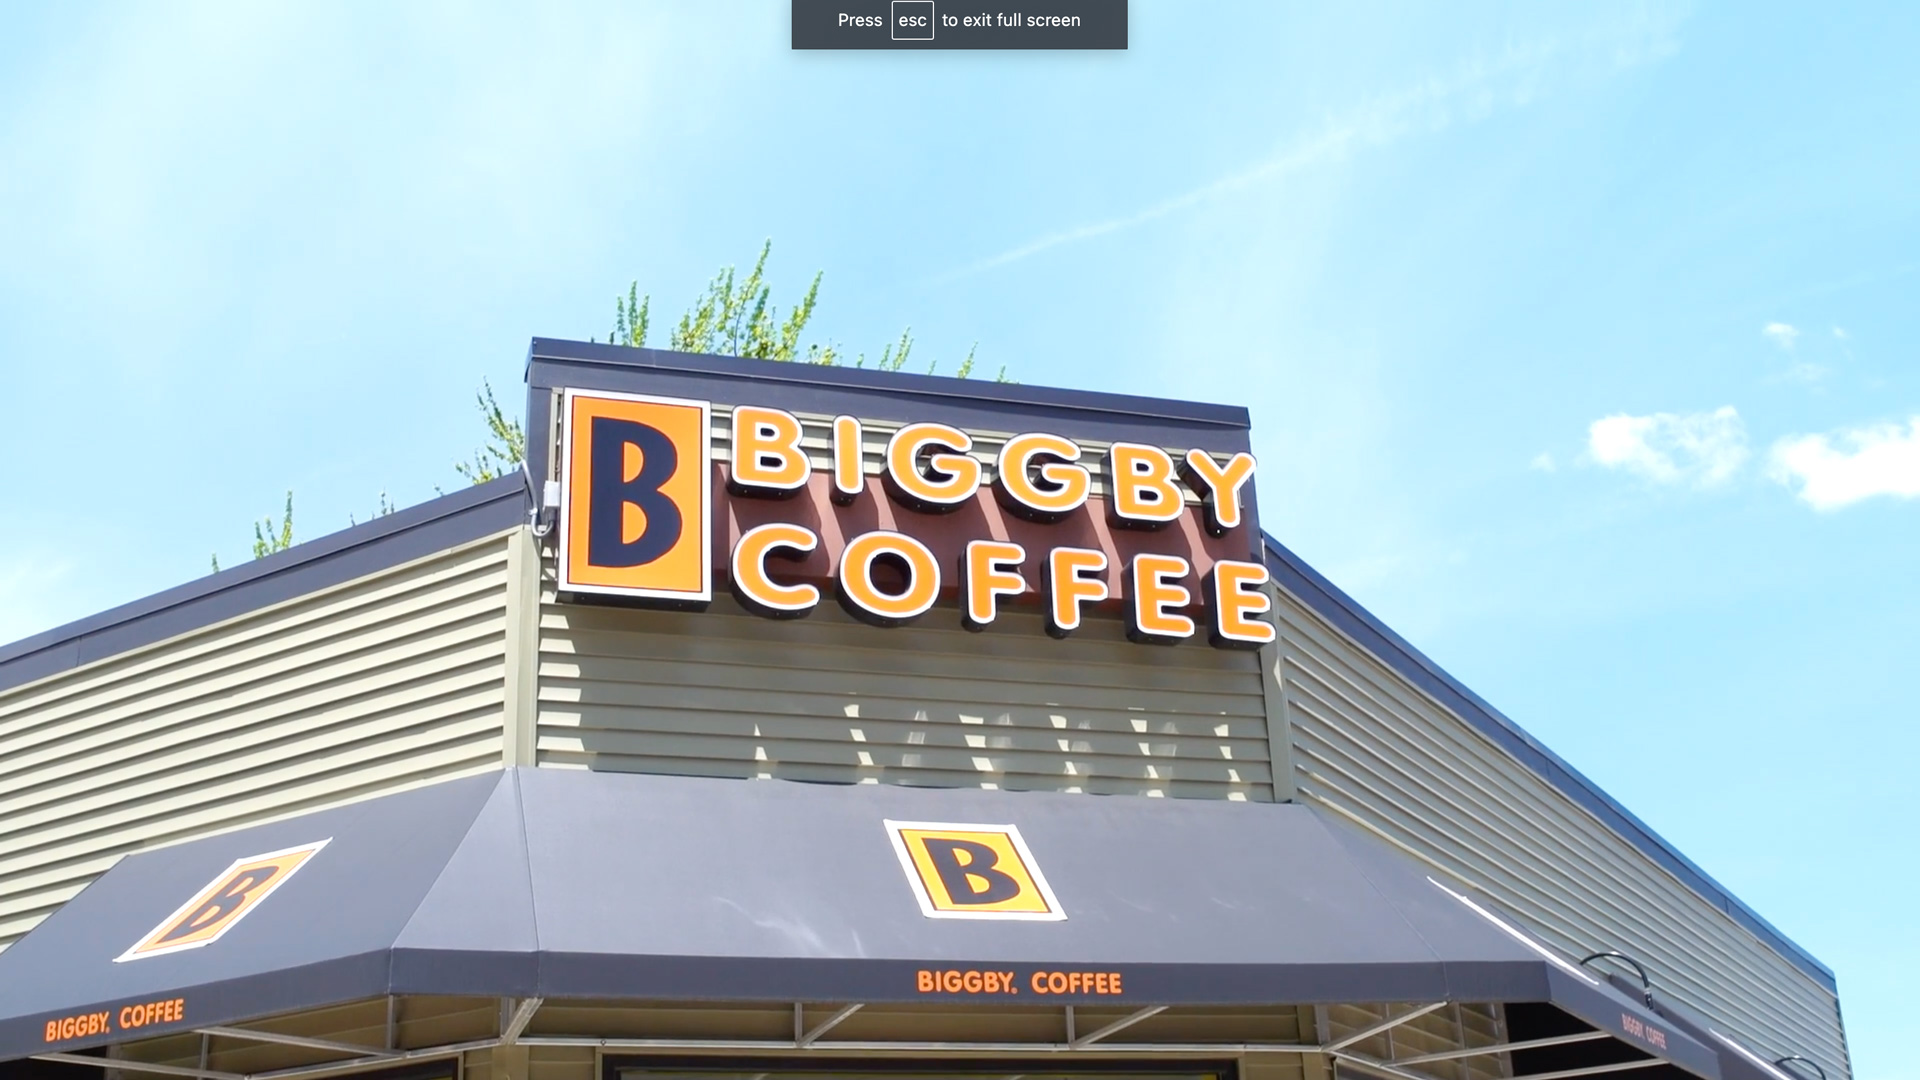 Biggby Coffee sign exterior